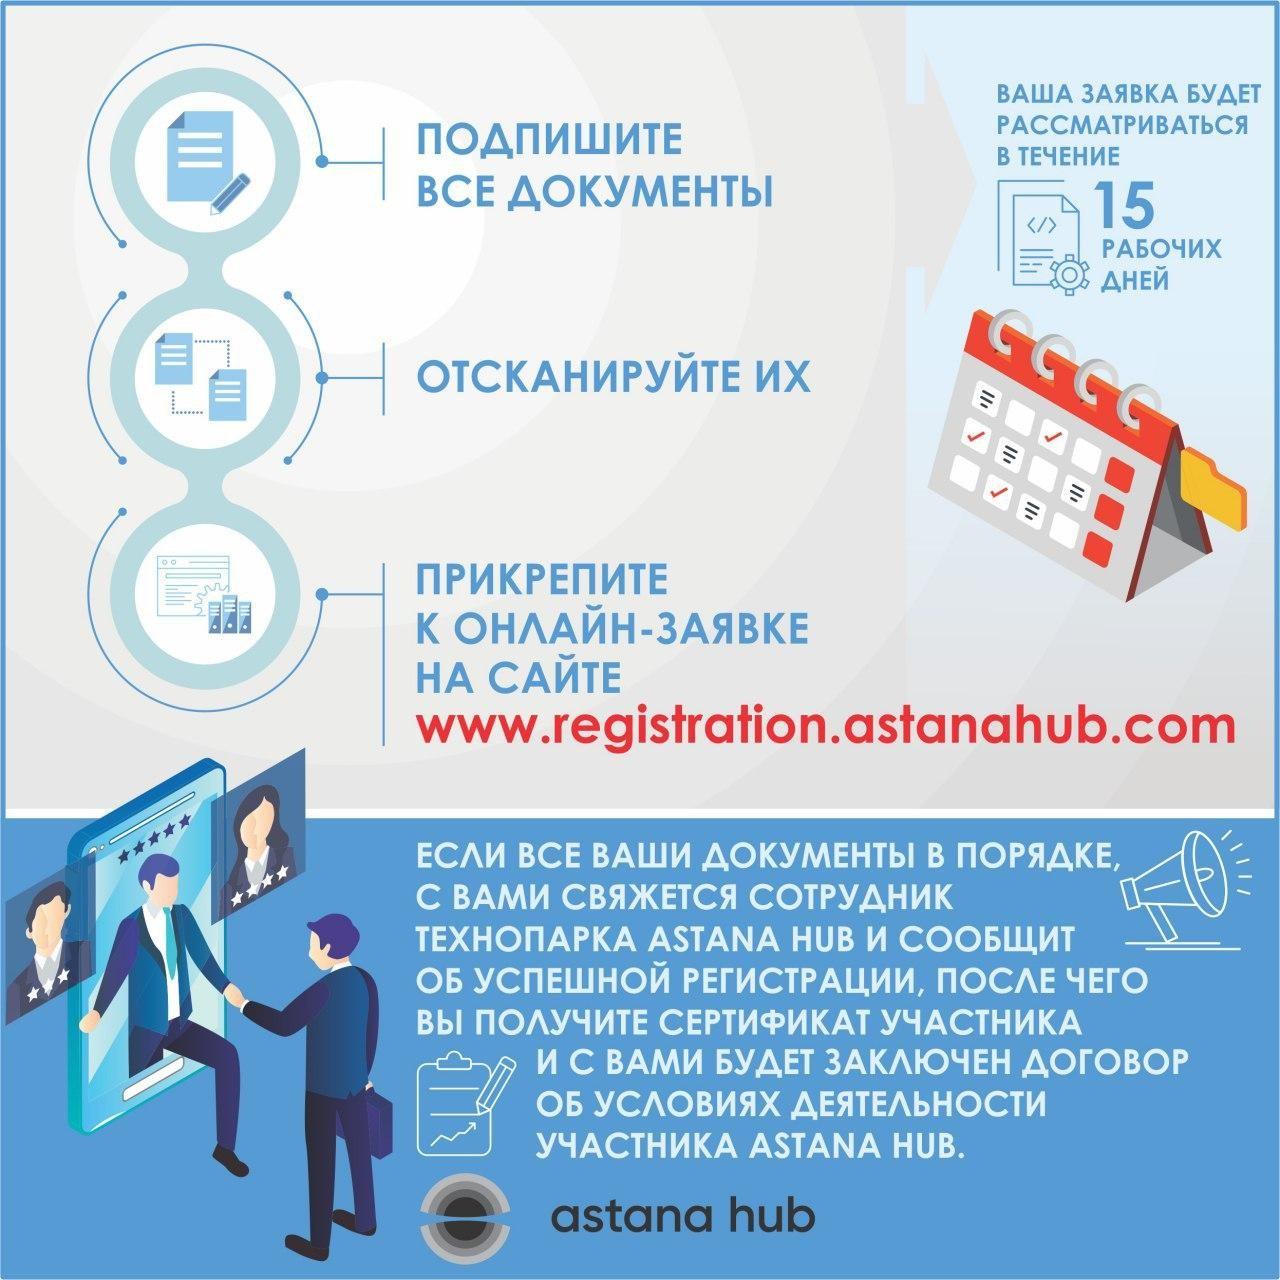 ИТ-бизнес в Казахстане. Налоговые преференции и условия технопарка Astana Hub